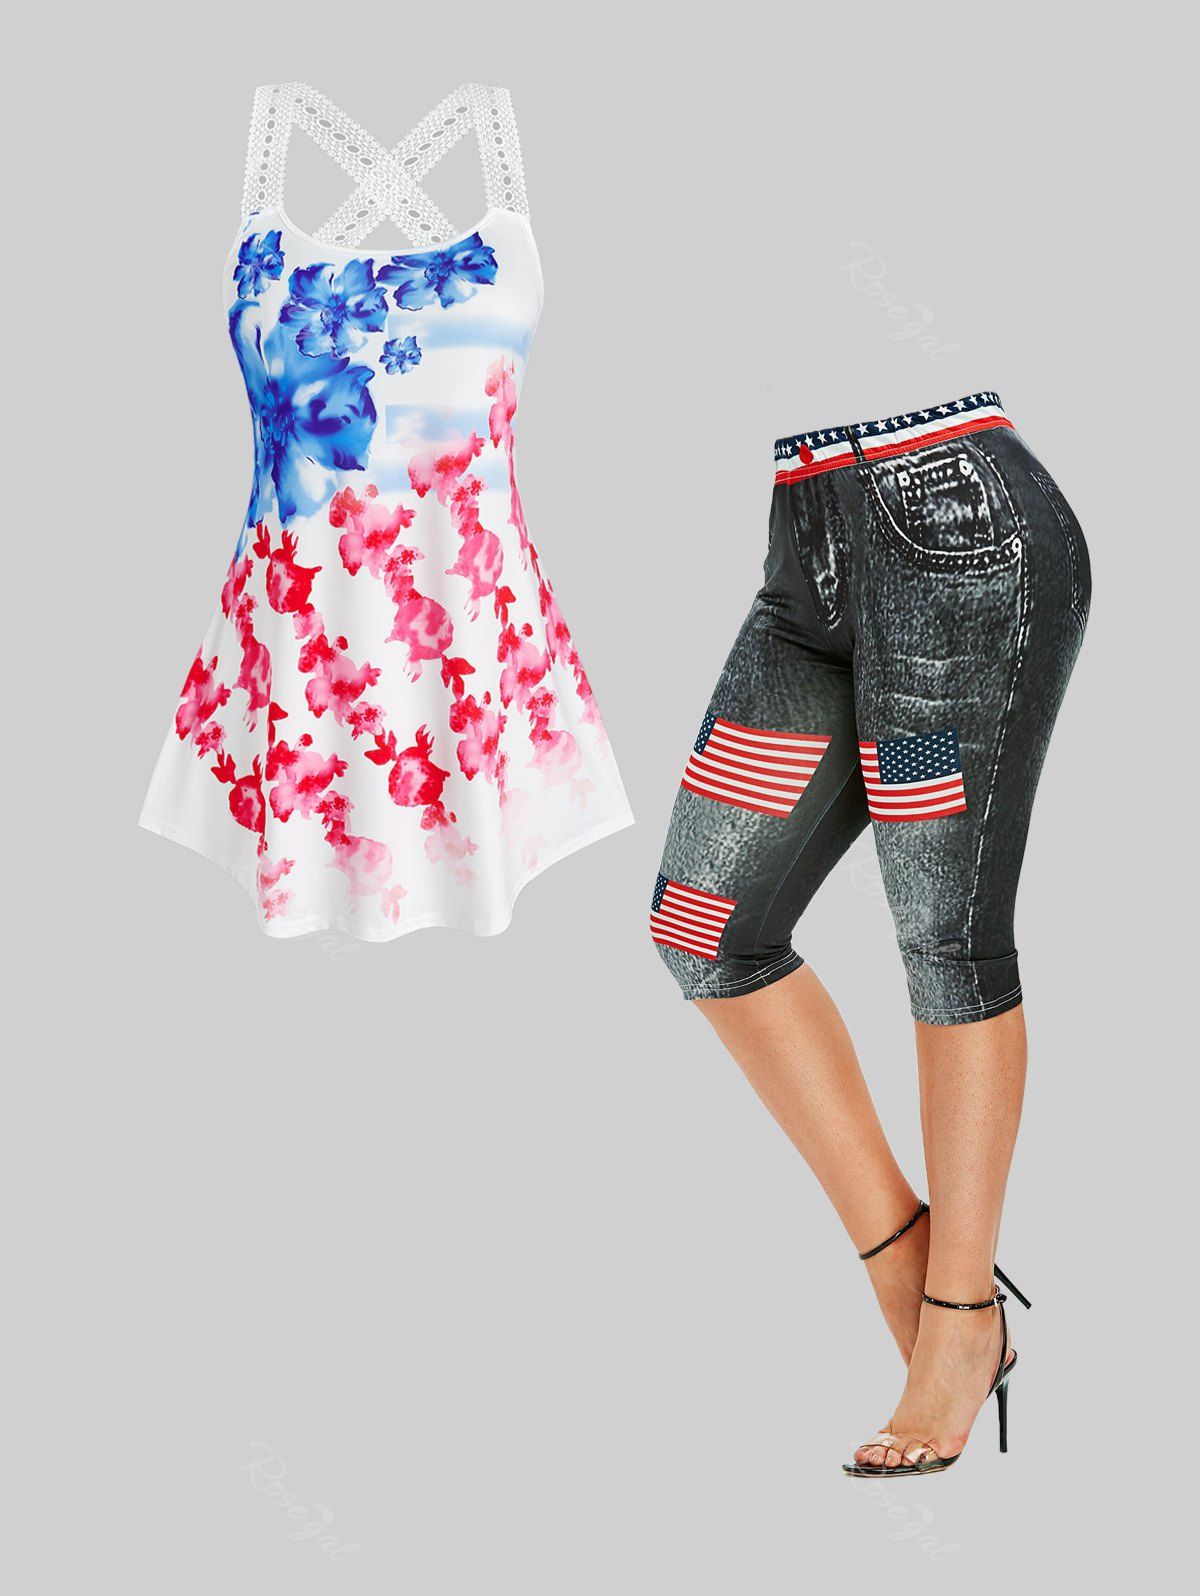 Shop American Flag Patriotic Tank Top and Capri Leggings Plus Size Summer Outfit  